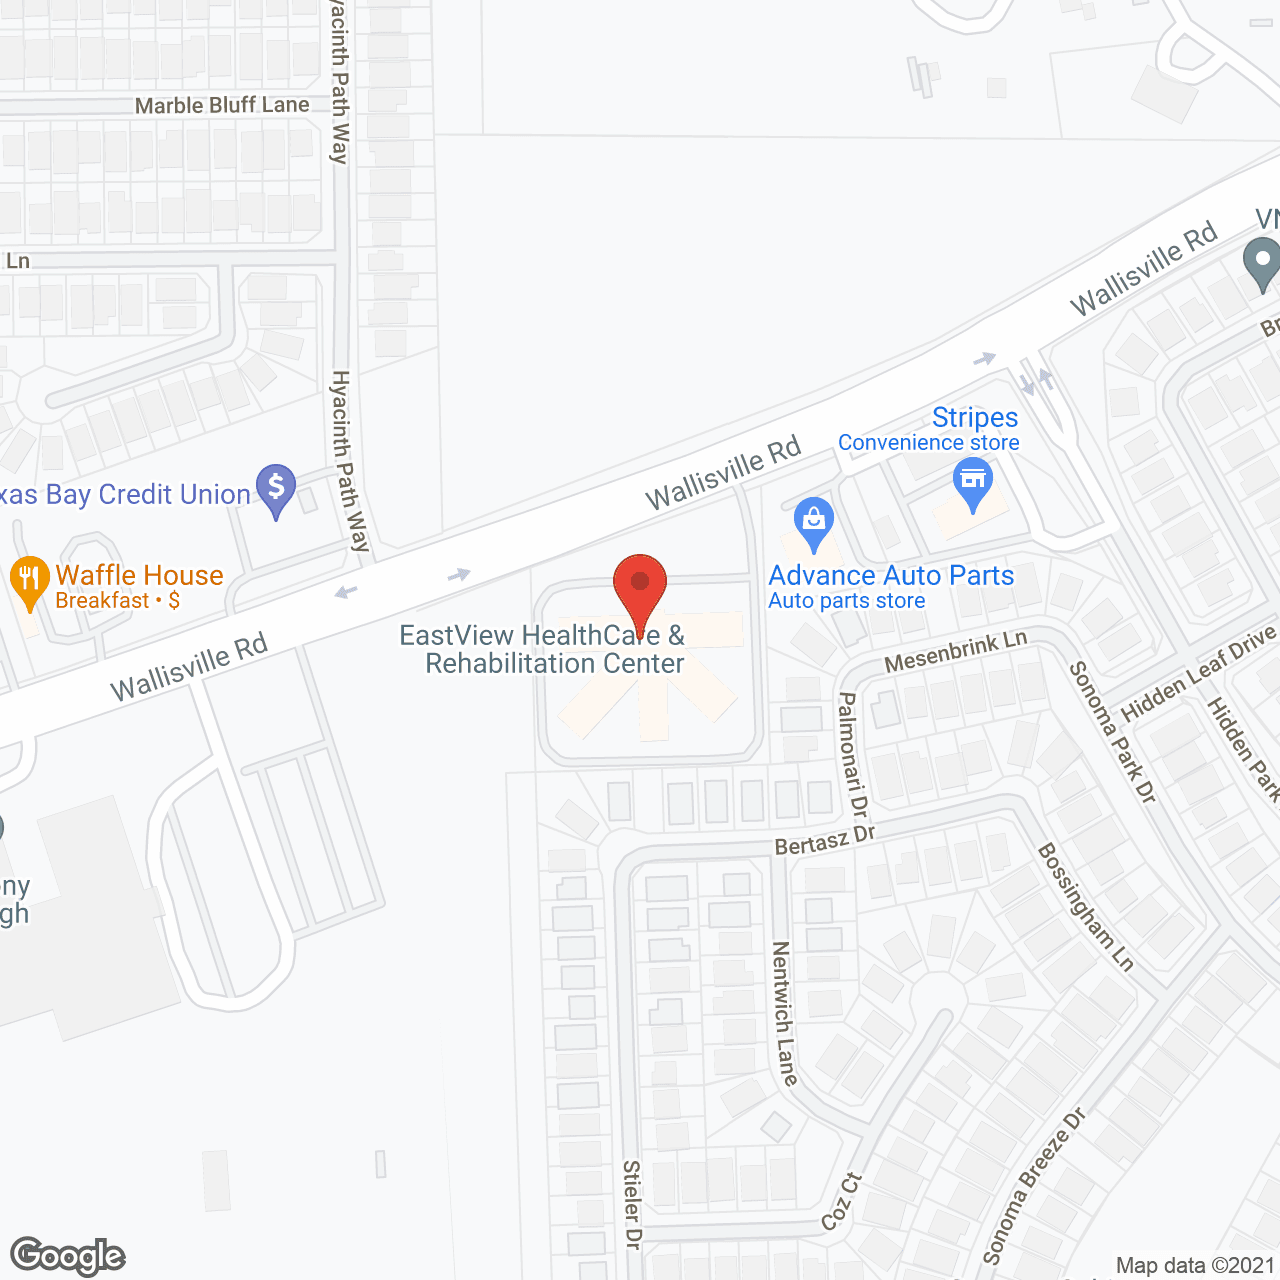 Eastview Healthcare & Rehabilitation Center in google map